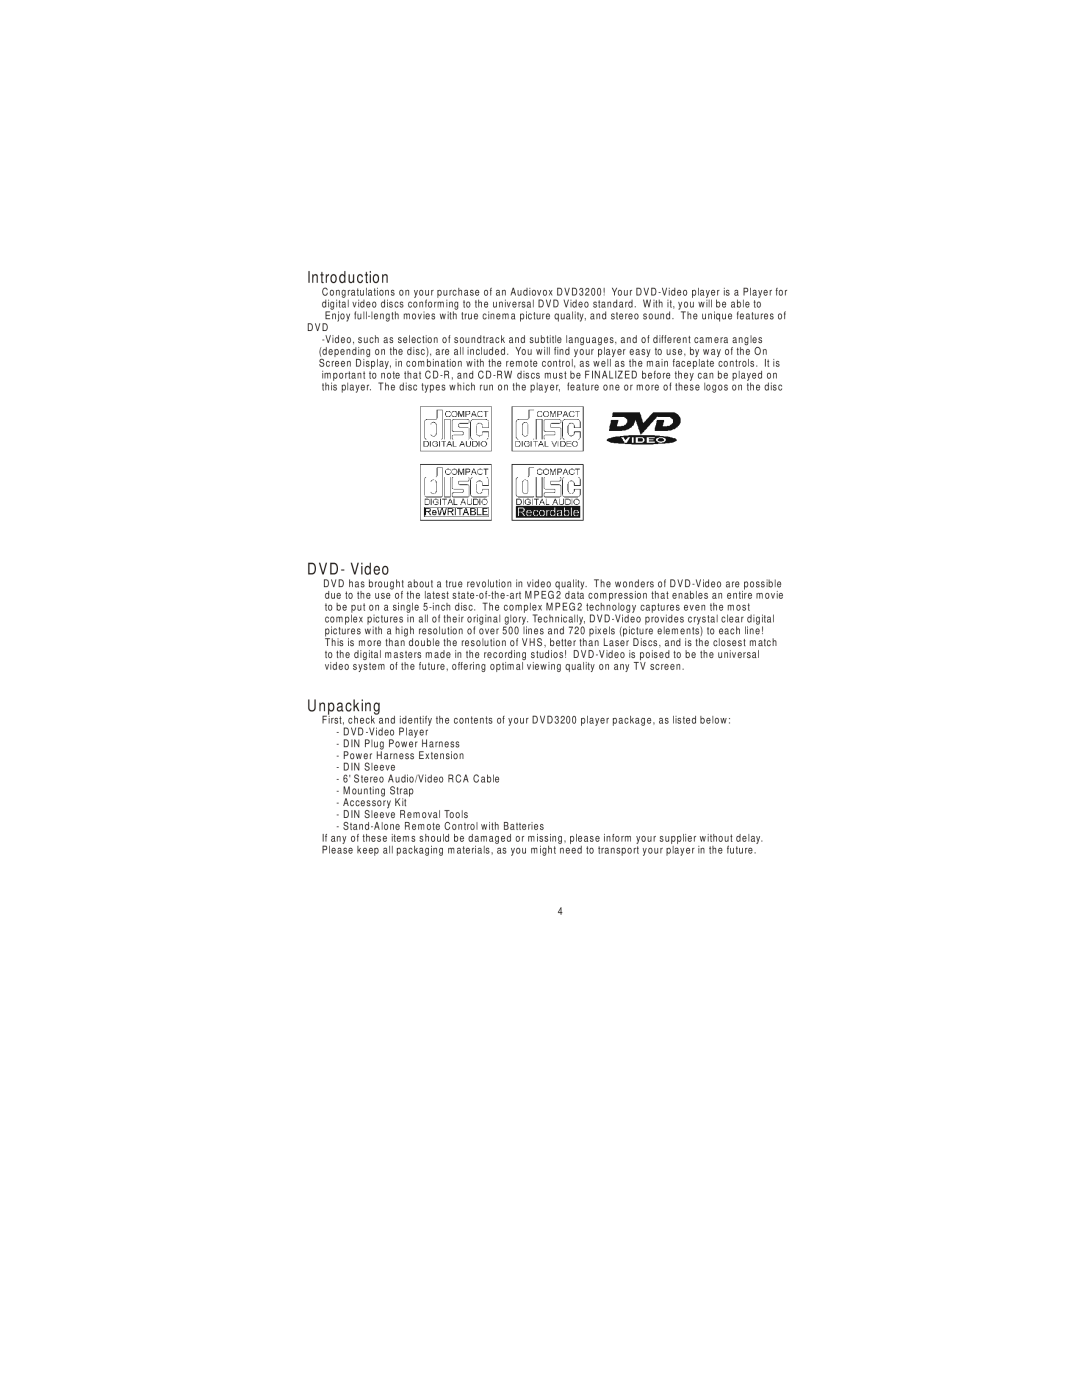 Audiovox 3200 owner manual Introduction, DVD - Video, U npacking 